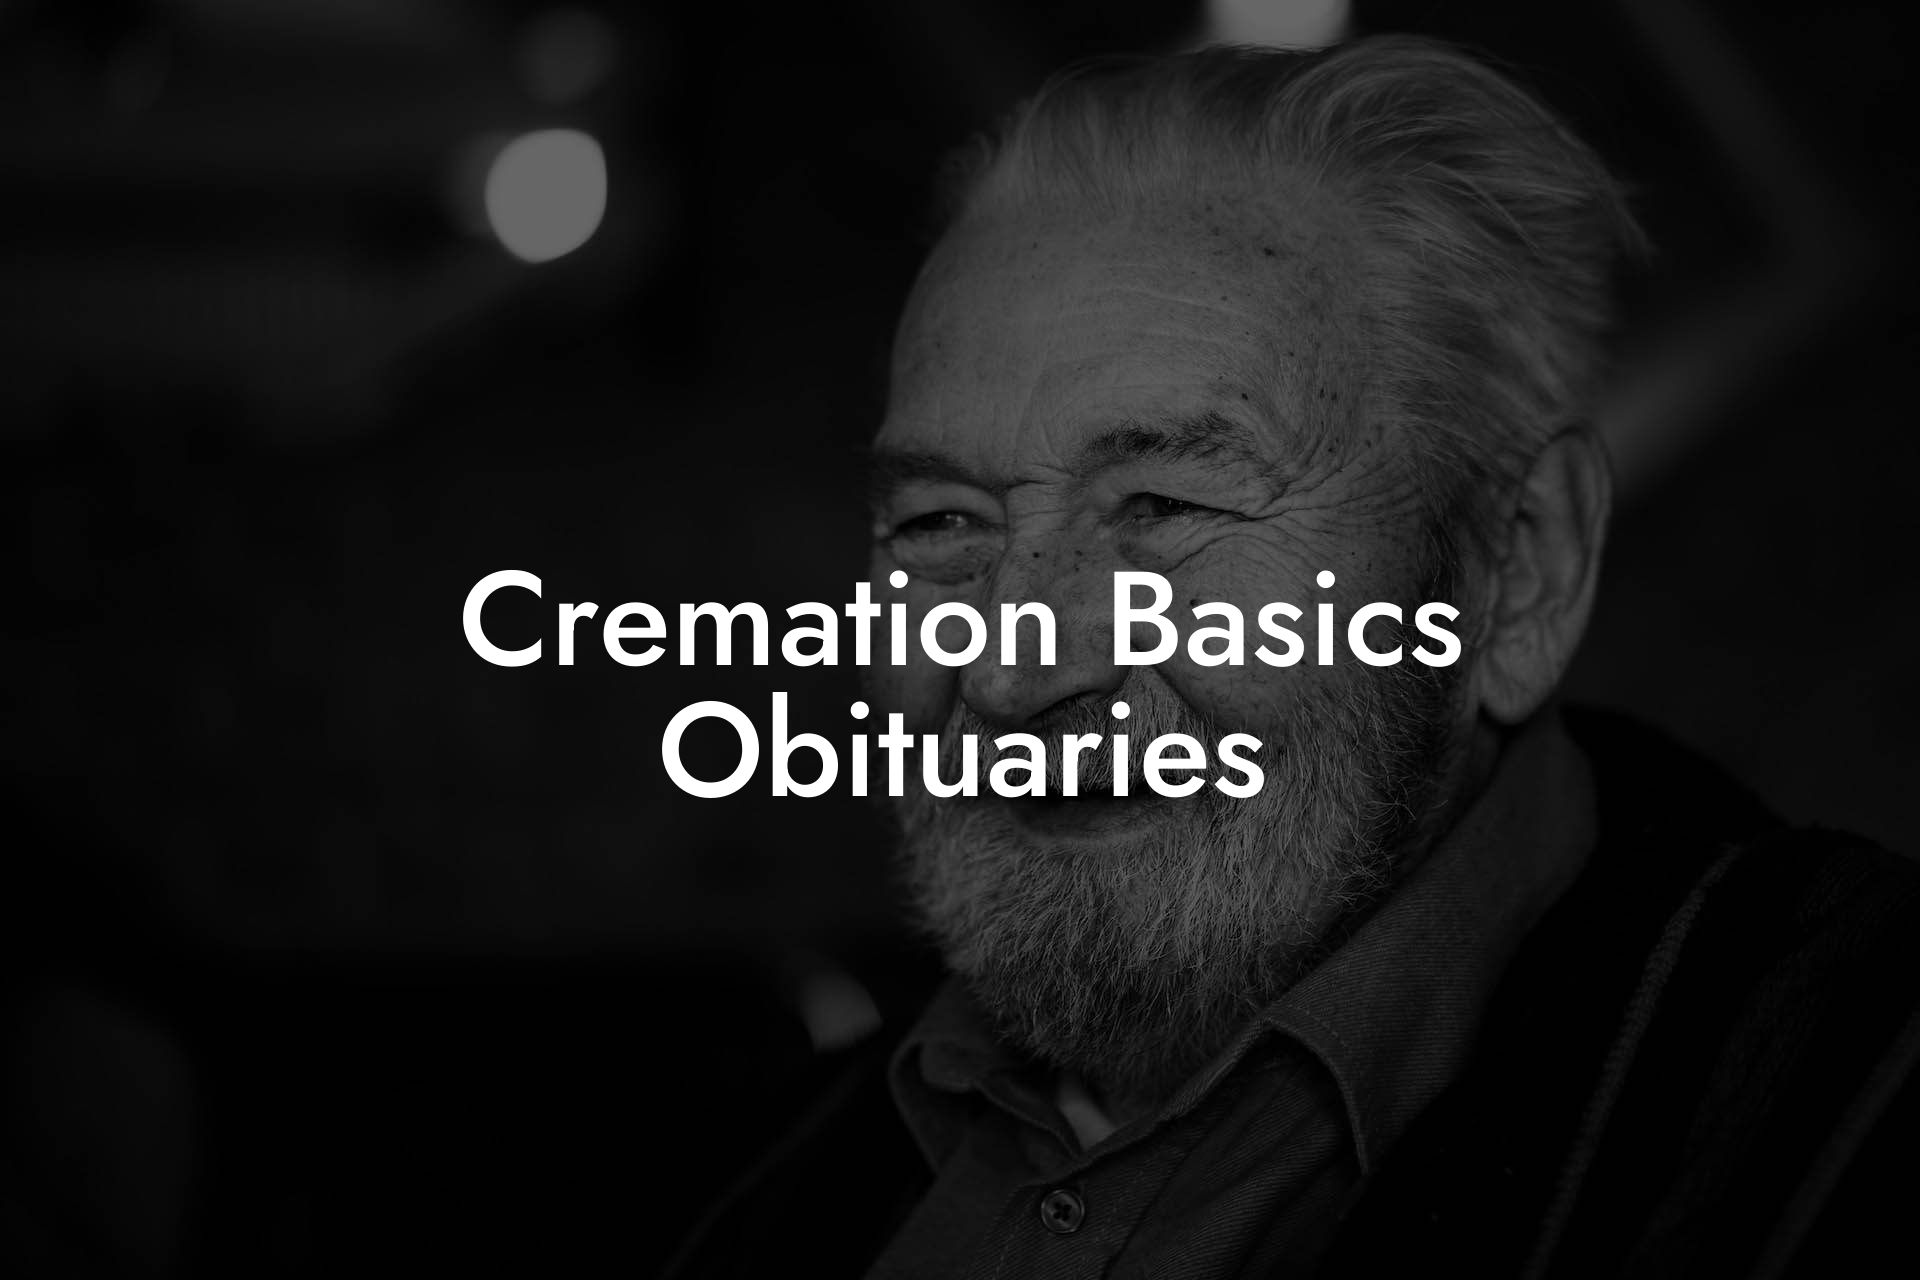 Cremation Basics Obituaries